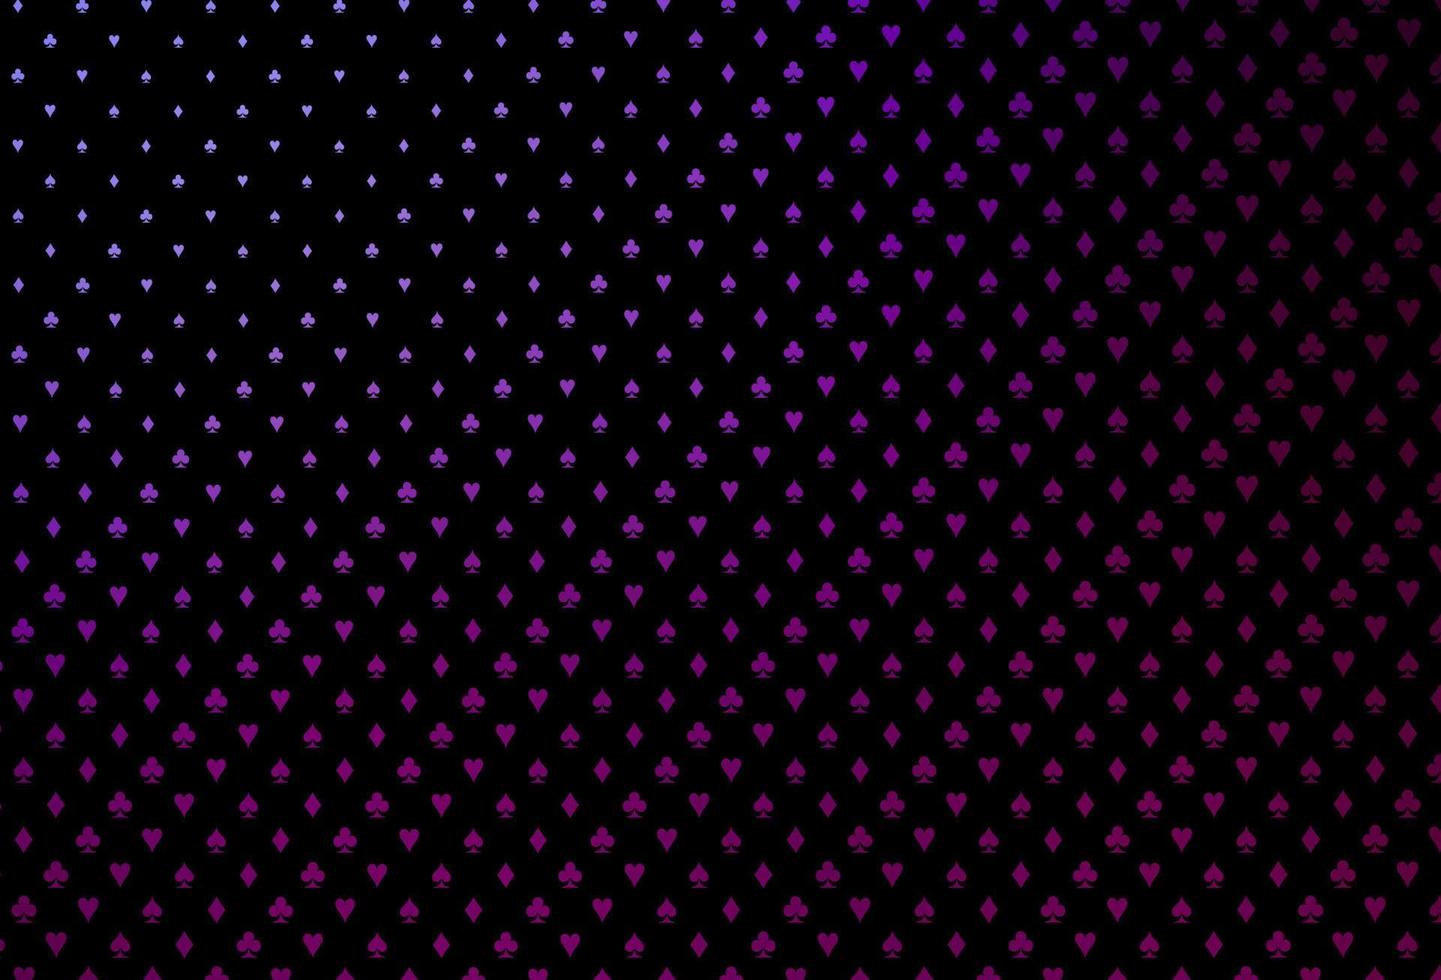 Dark purple vector cover with symbols of gamble.